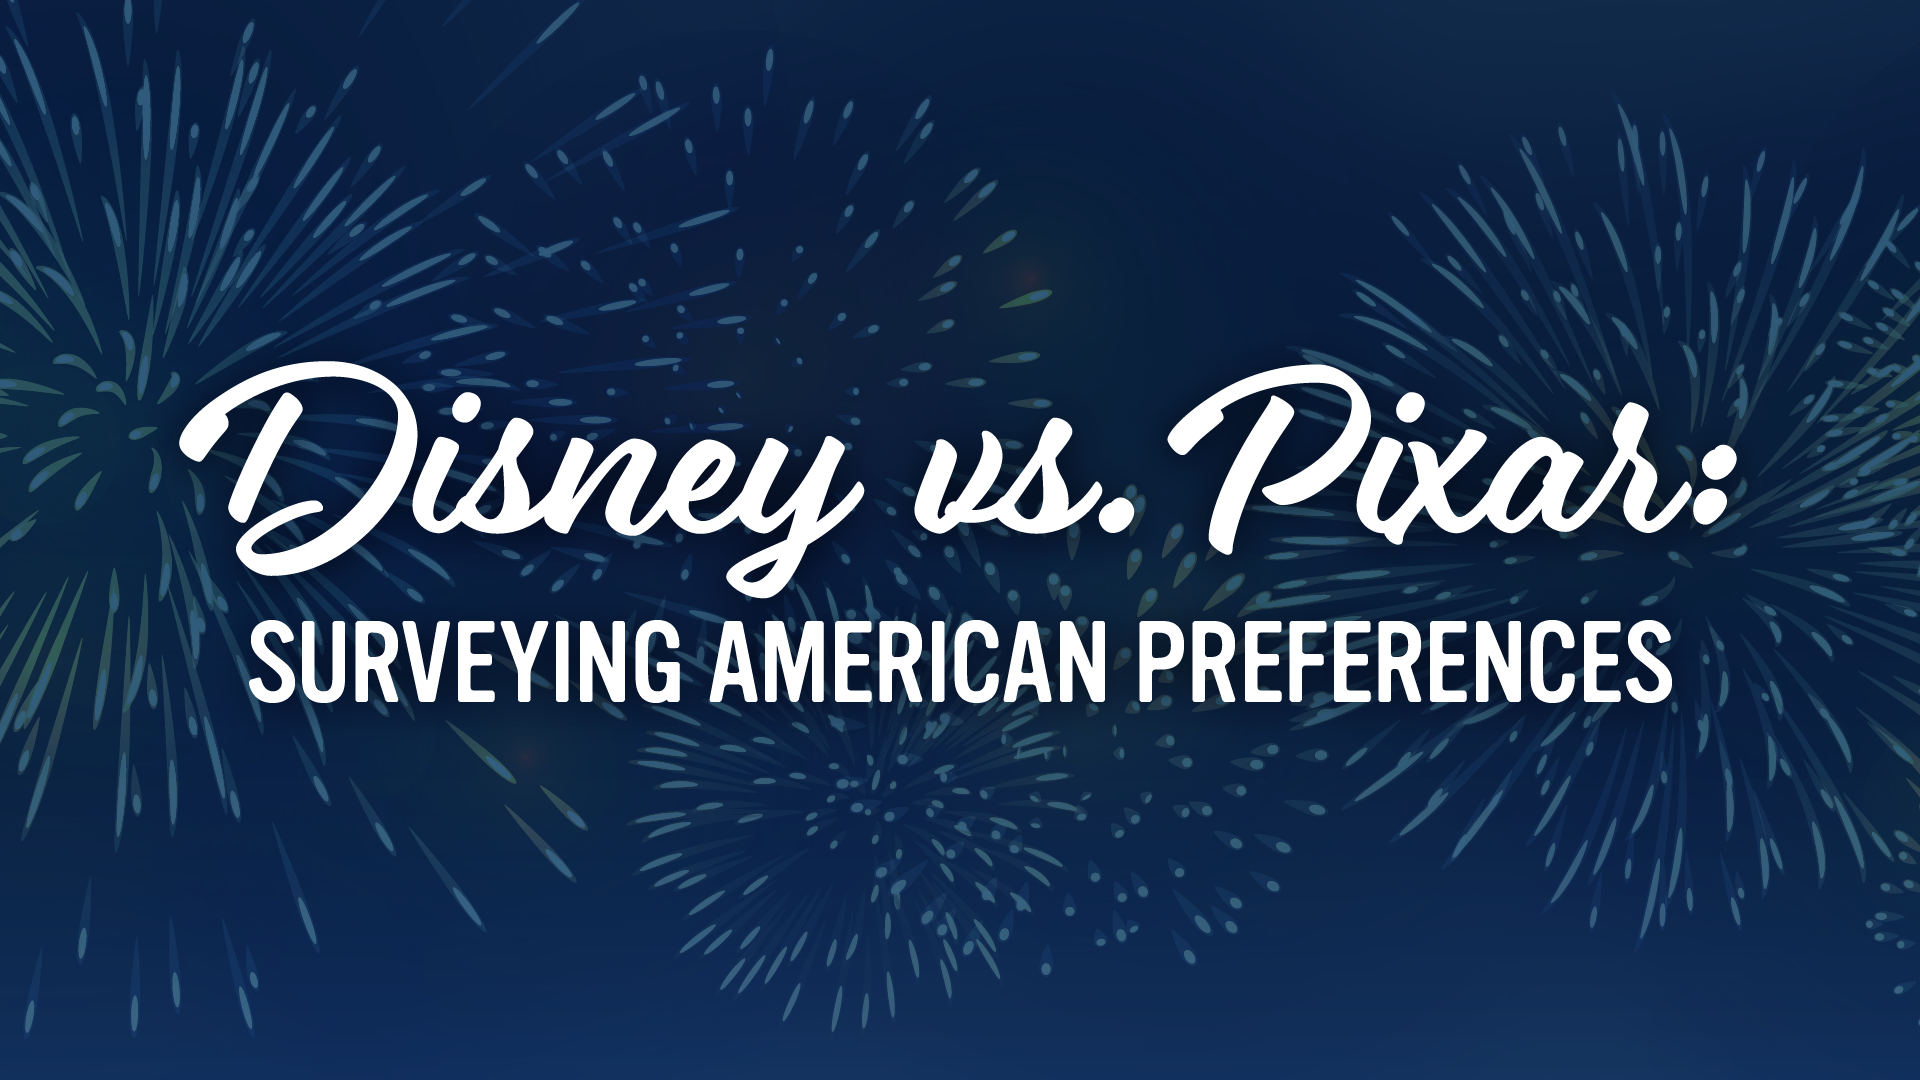 Header image for Disney vs Pixar survey